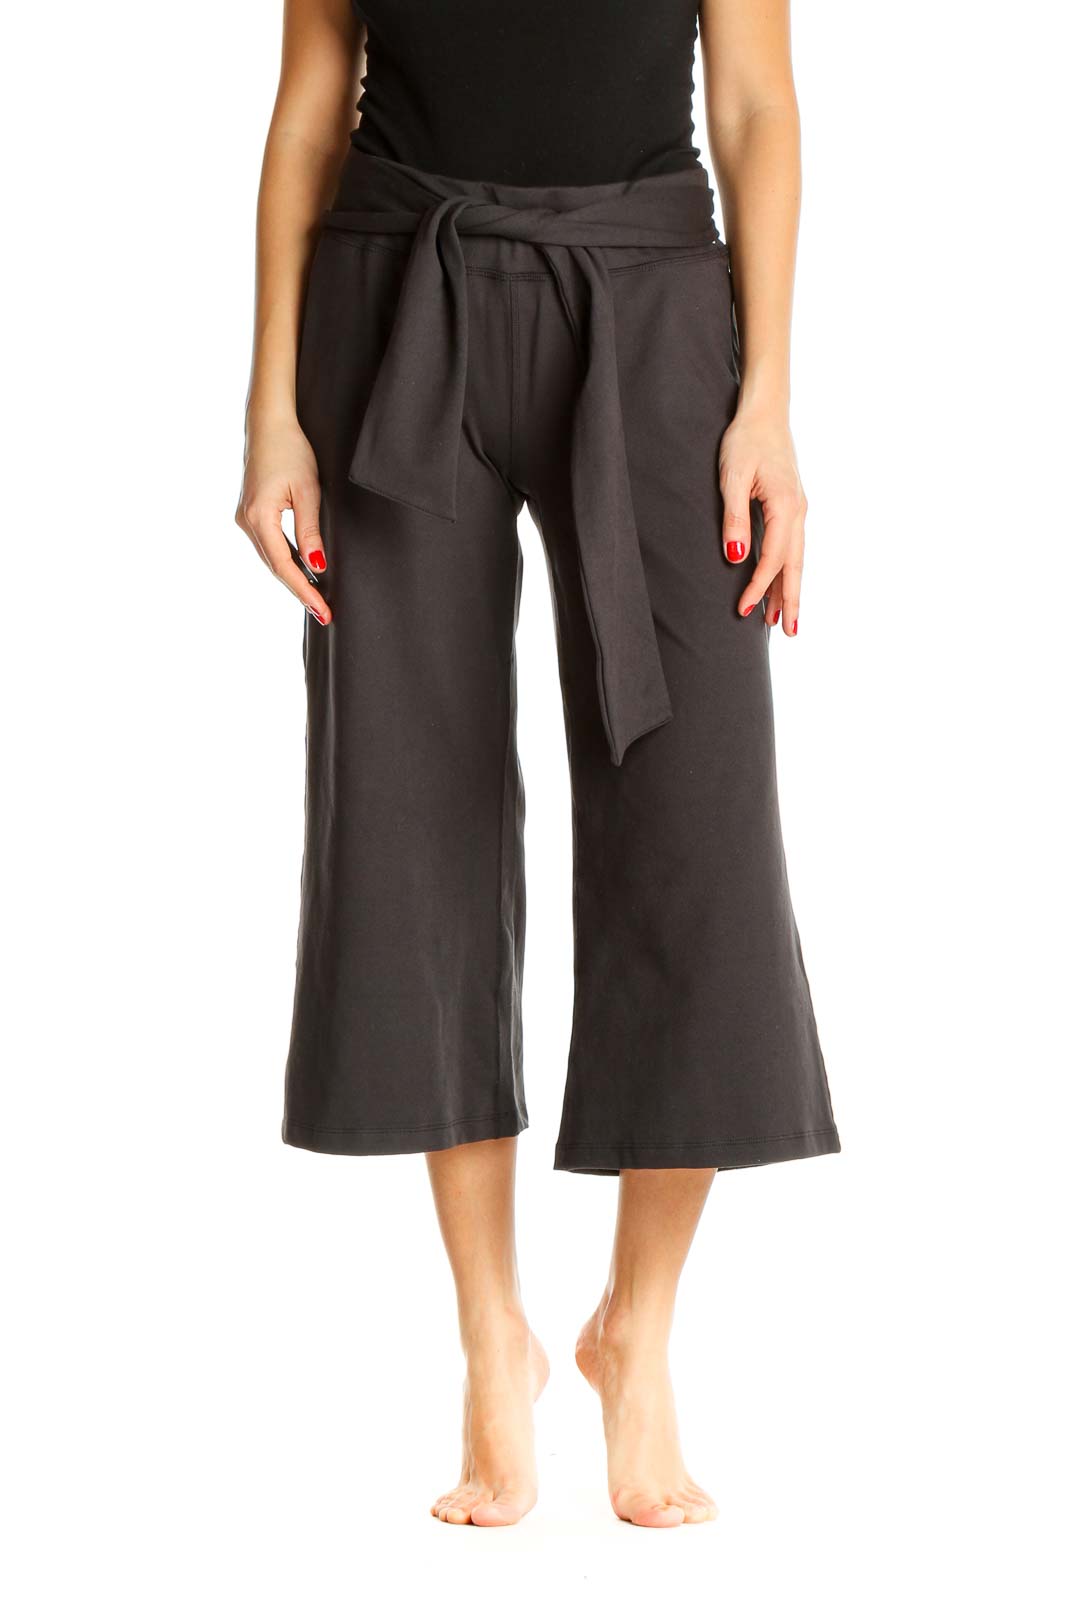 Black Solid Activewear Culottes Pants Front